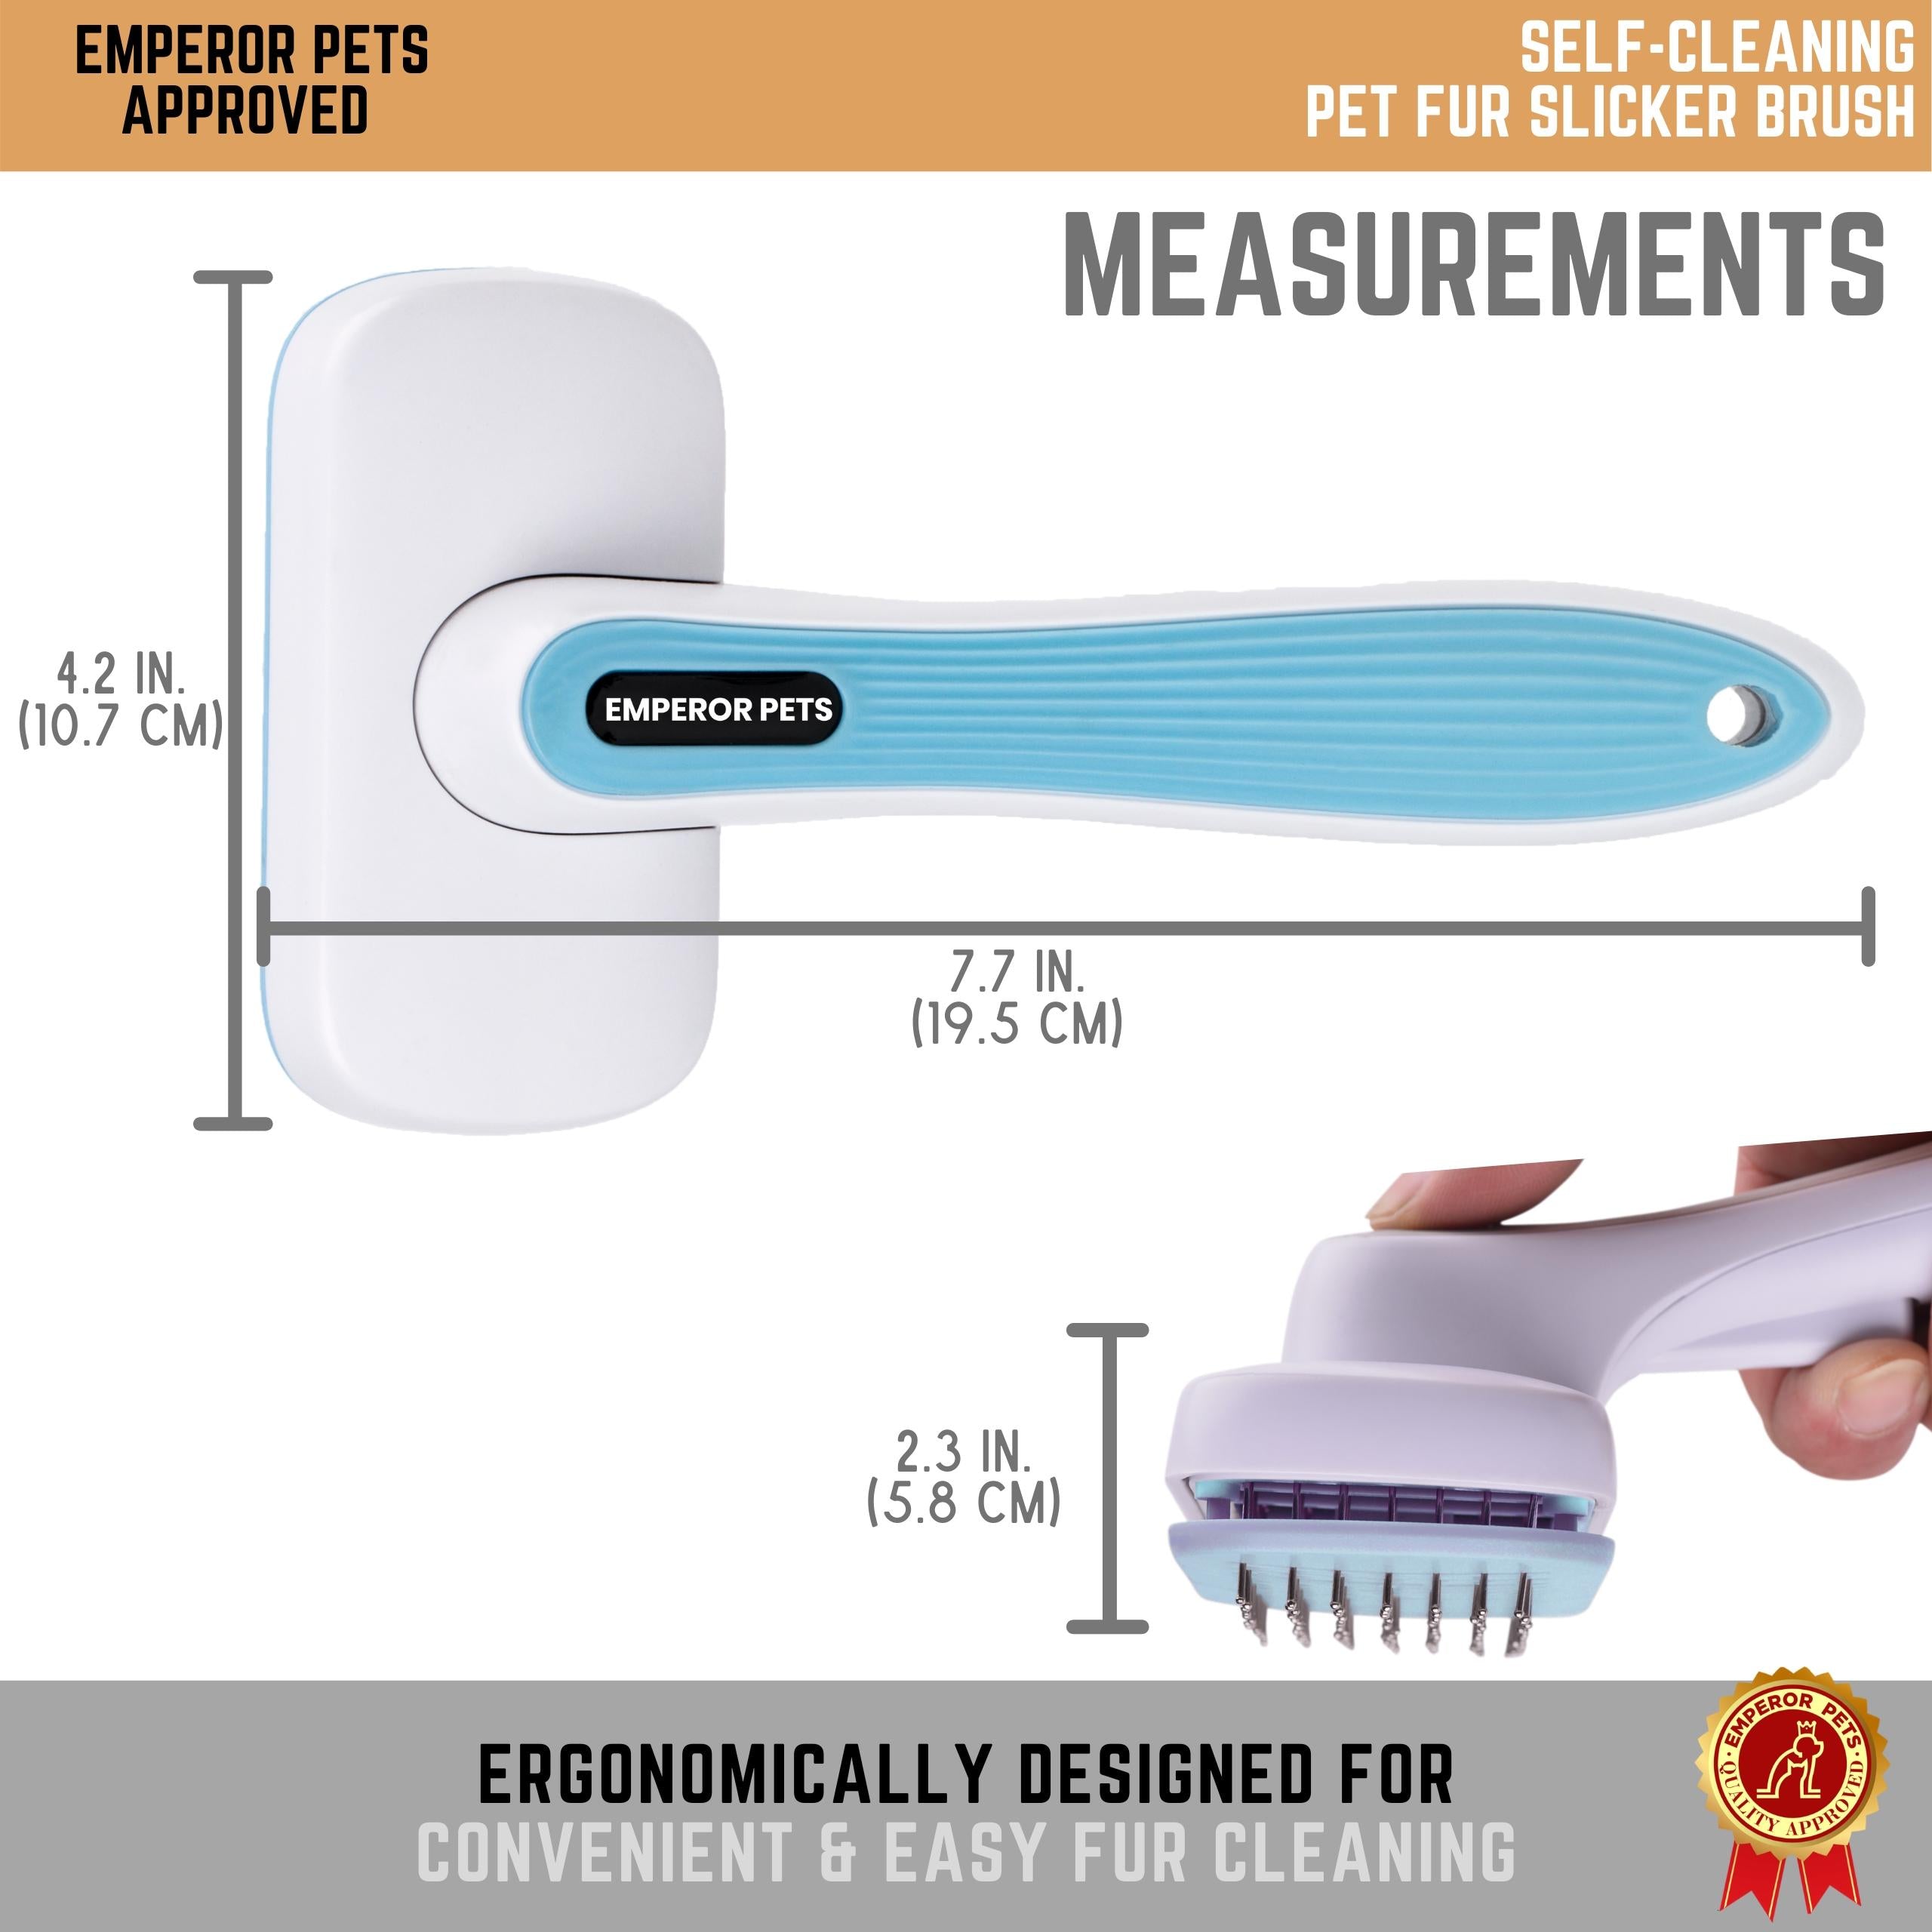 Emperor Pets Self Cleaning Pet Fur Slicker Brush for Short Fur Pets, Dog Brush, Cat Brush, Blue Color - Image 5 Measurements